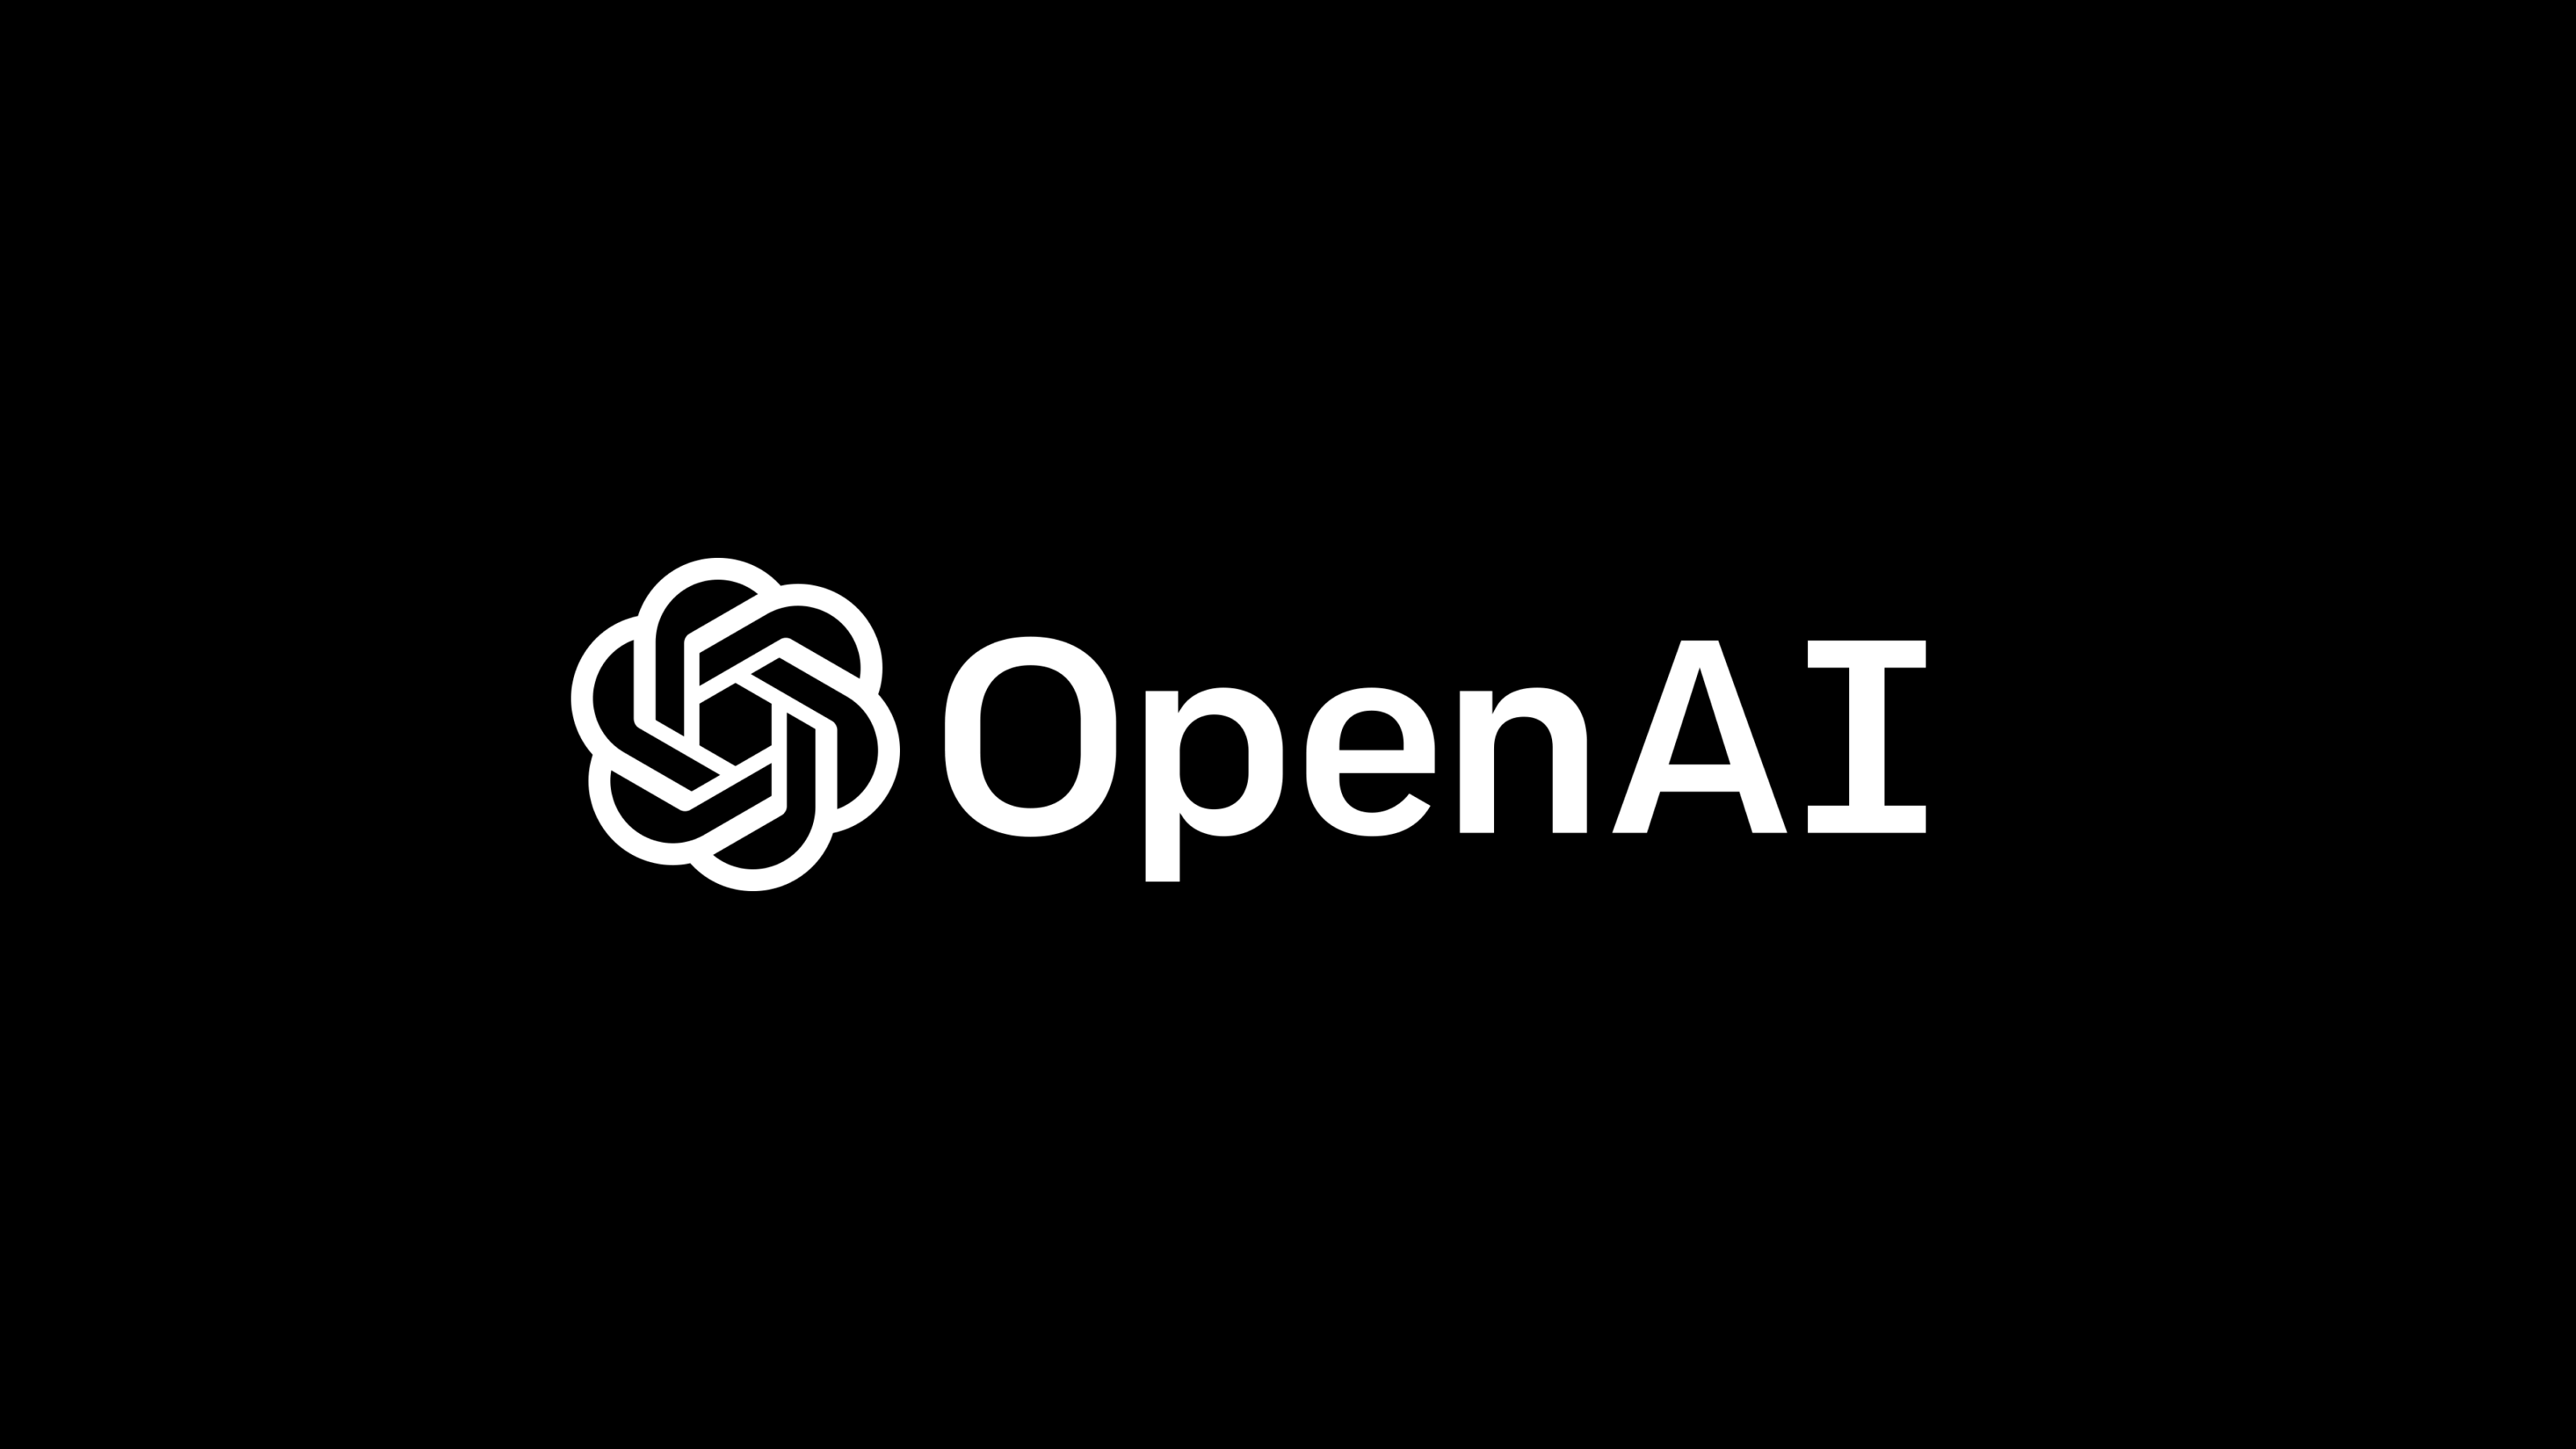 OpenAI's services are not available in your country - 3 способа исправить ошибку "API OpenAI недоступен в вашей стране"